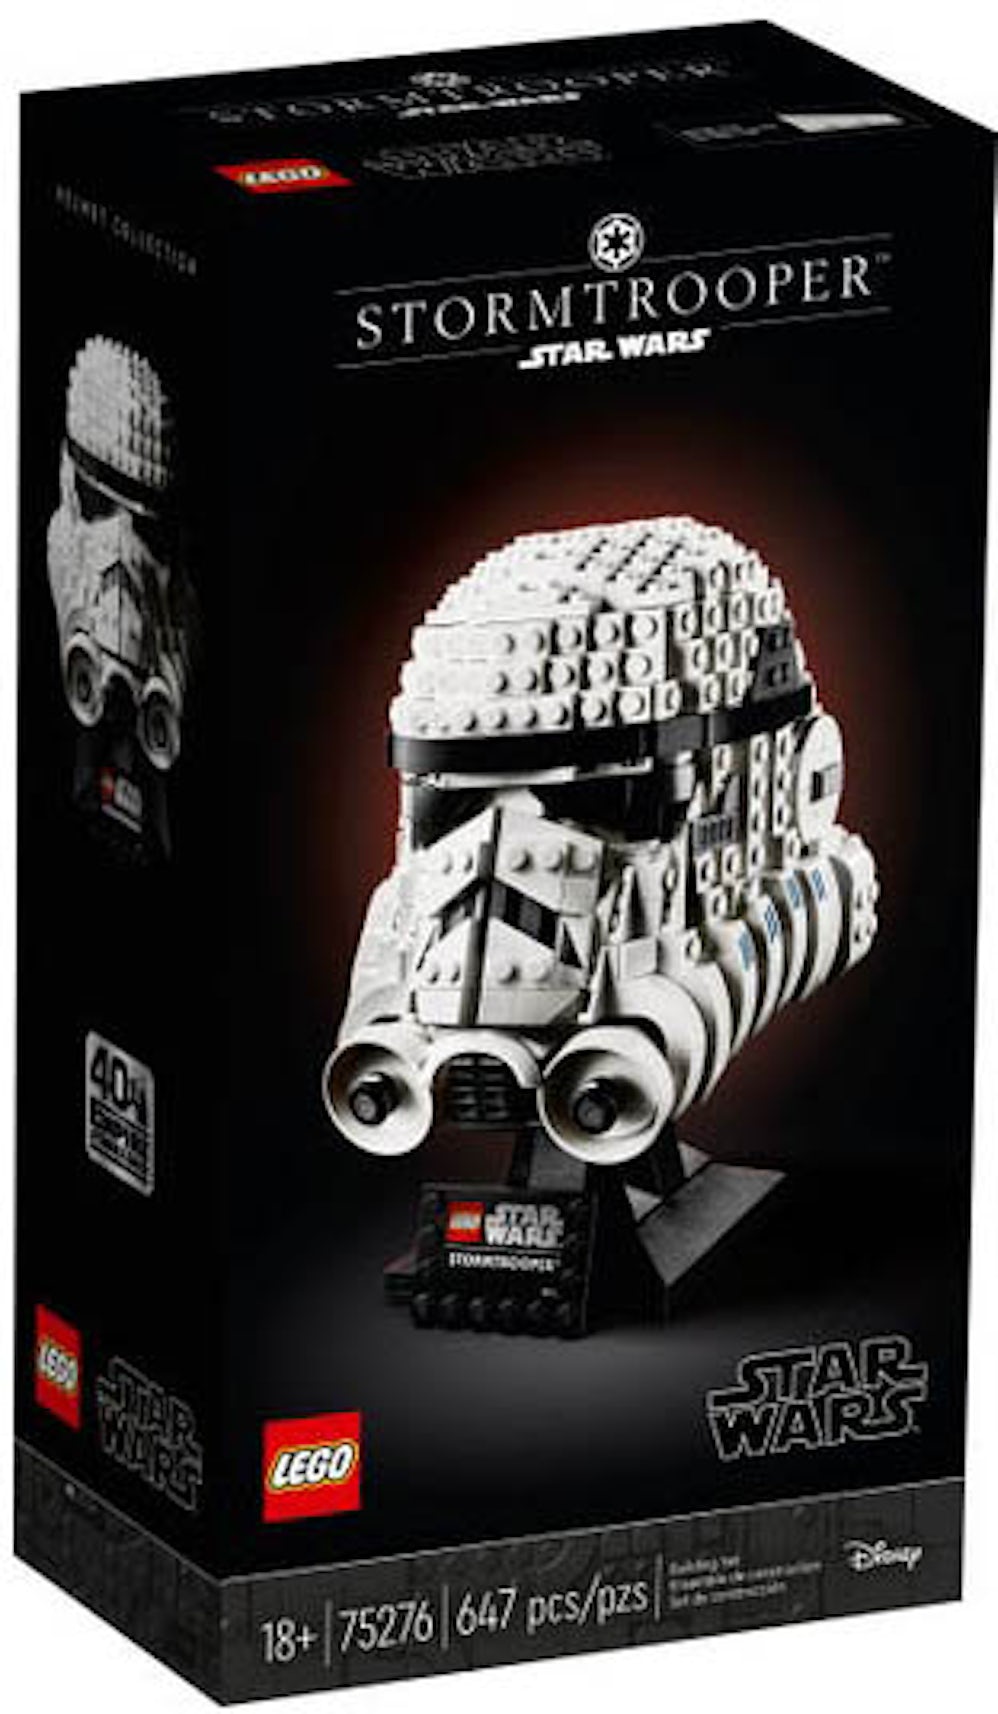 Typo on an official Star Wars Lego Box: Dark Vader : r